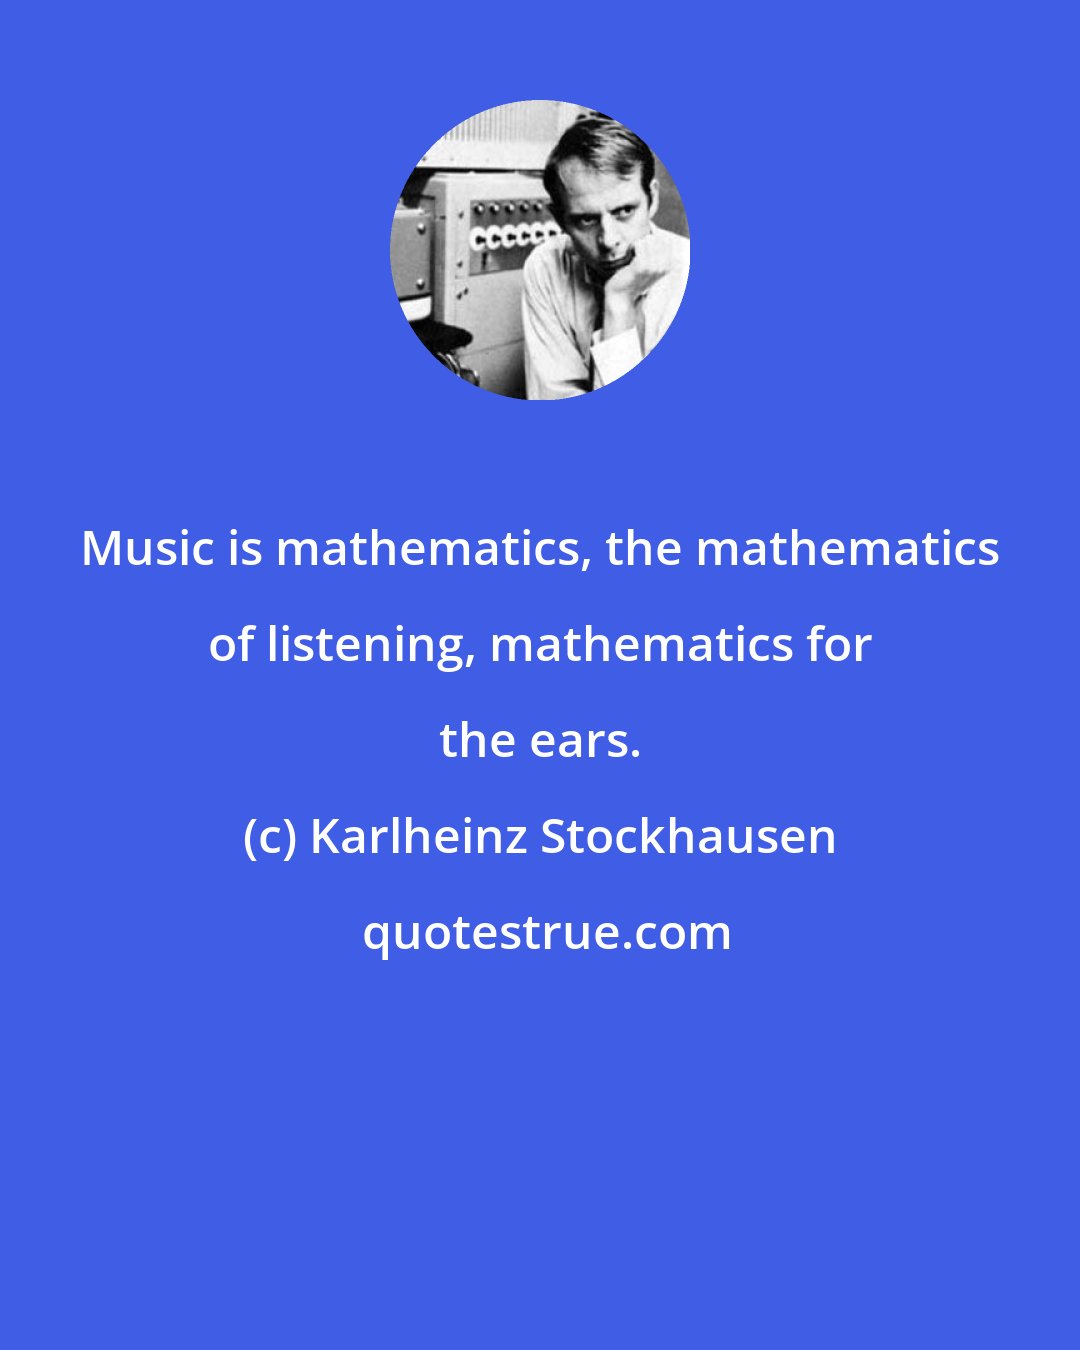 Karlheinz Stockhausen: Music is mathematics, the mathematics of listening, mathematics for the ears.